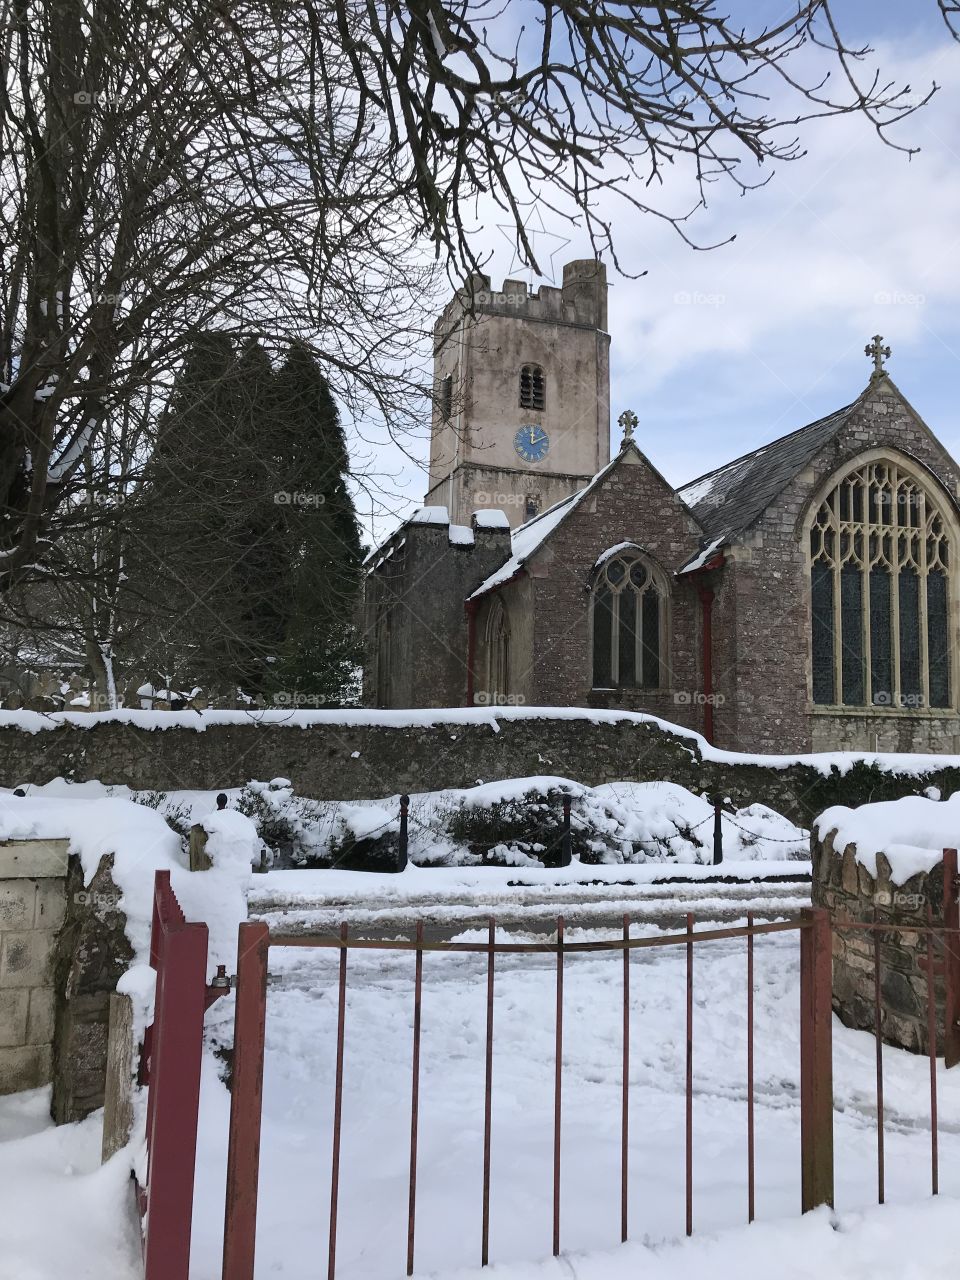 Kingskerswell Church in Devon looking crisp and fine in its snowy format.